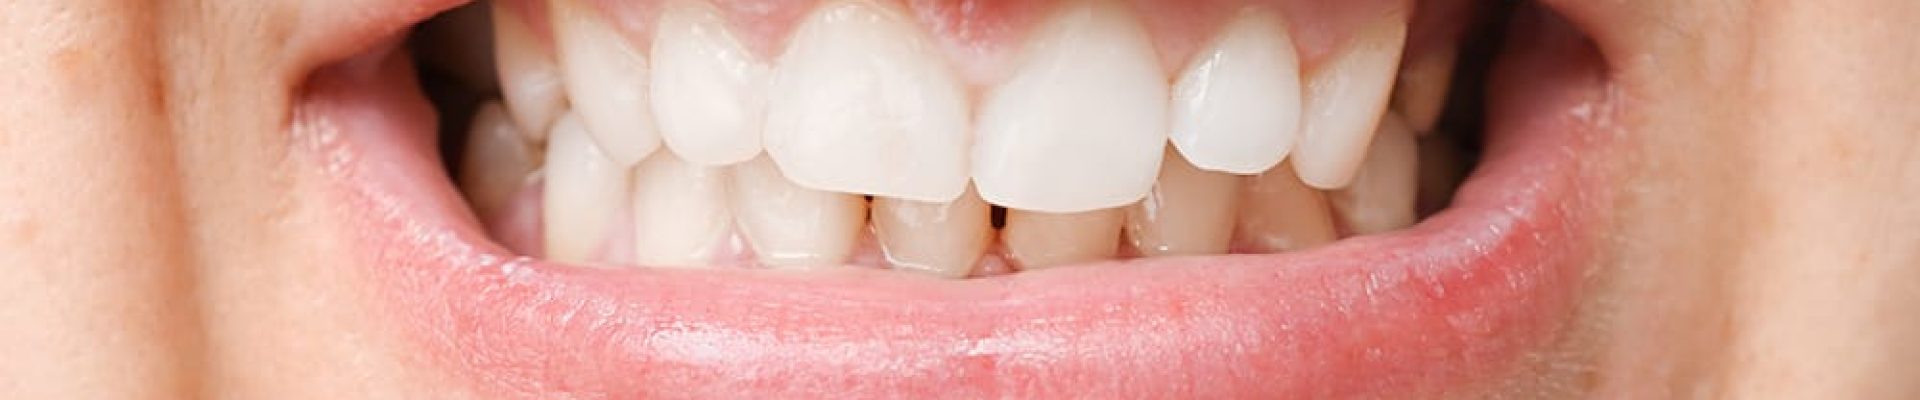 maloclusion dientes